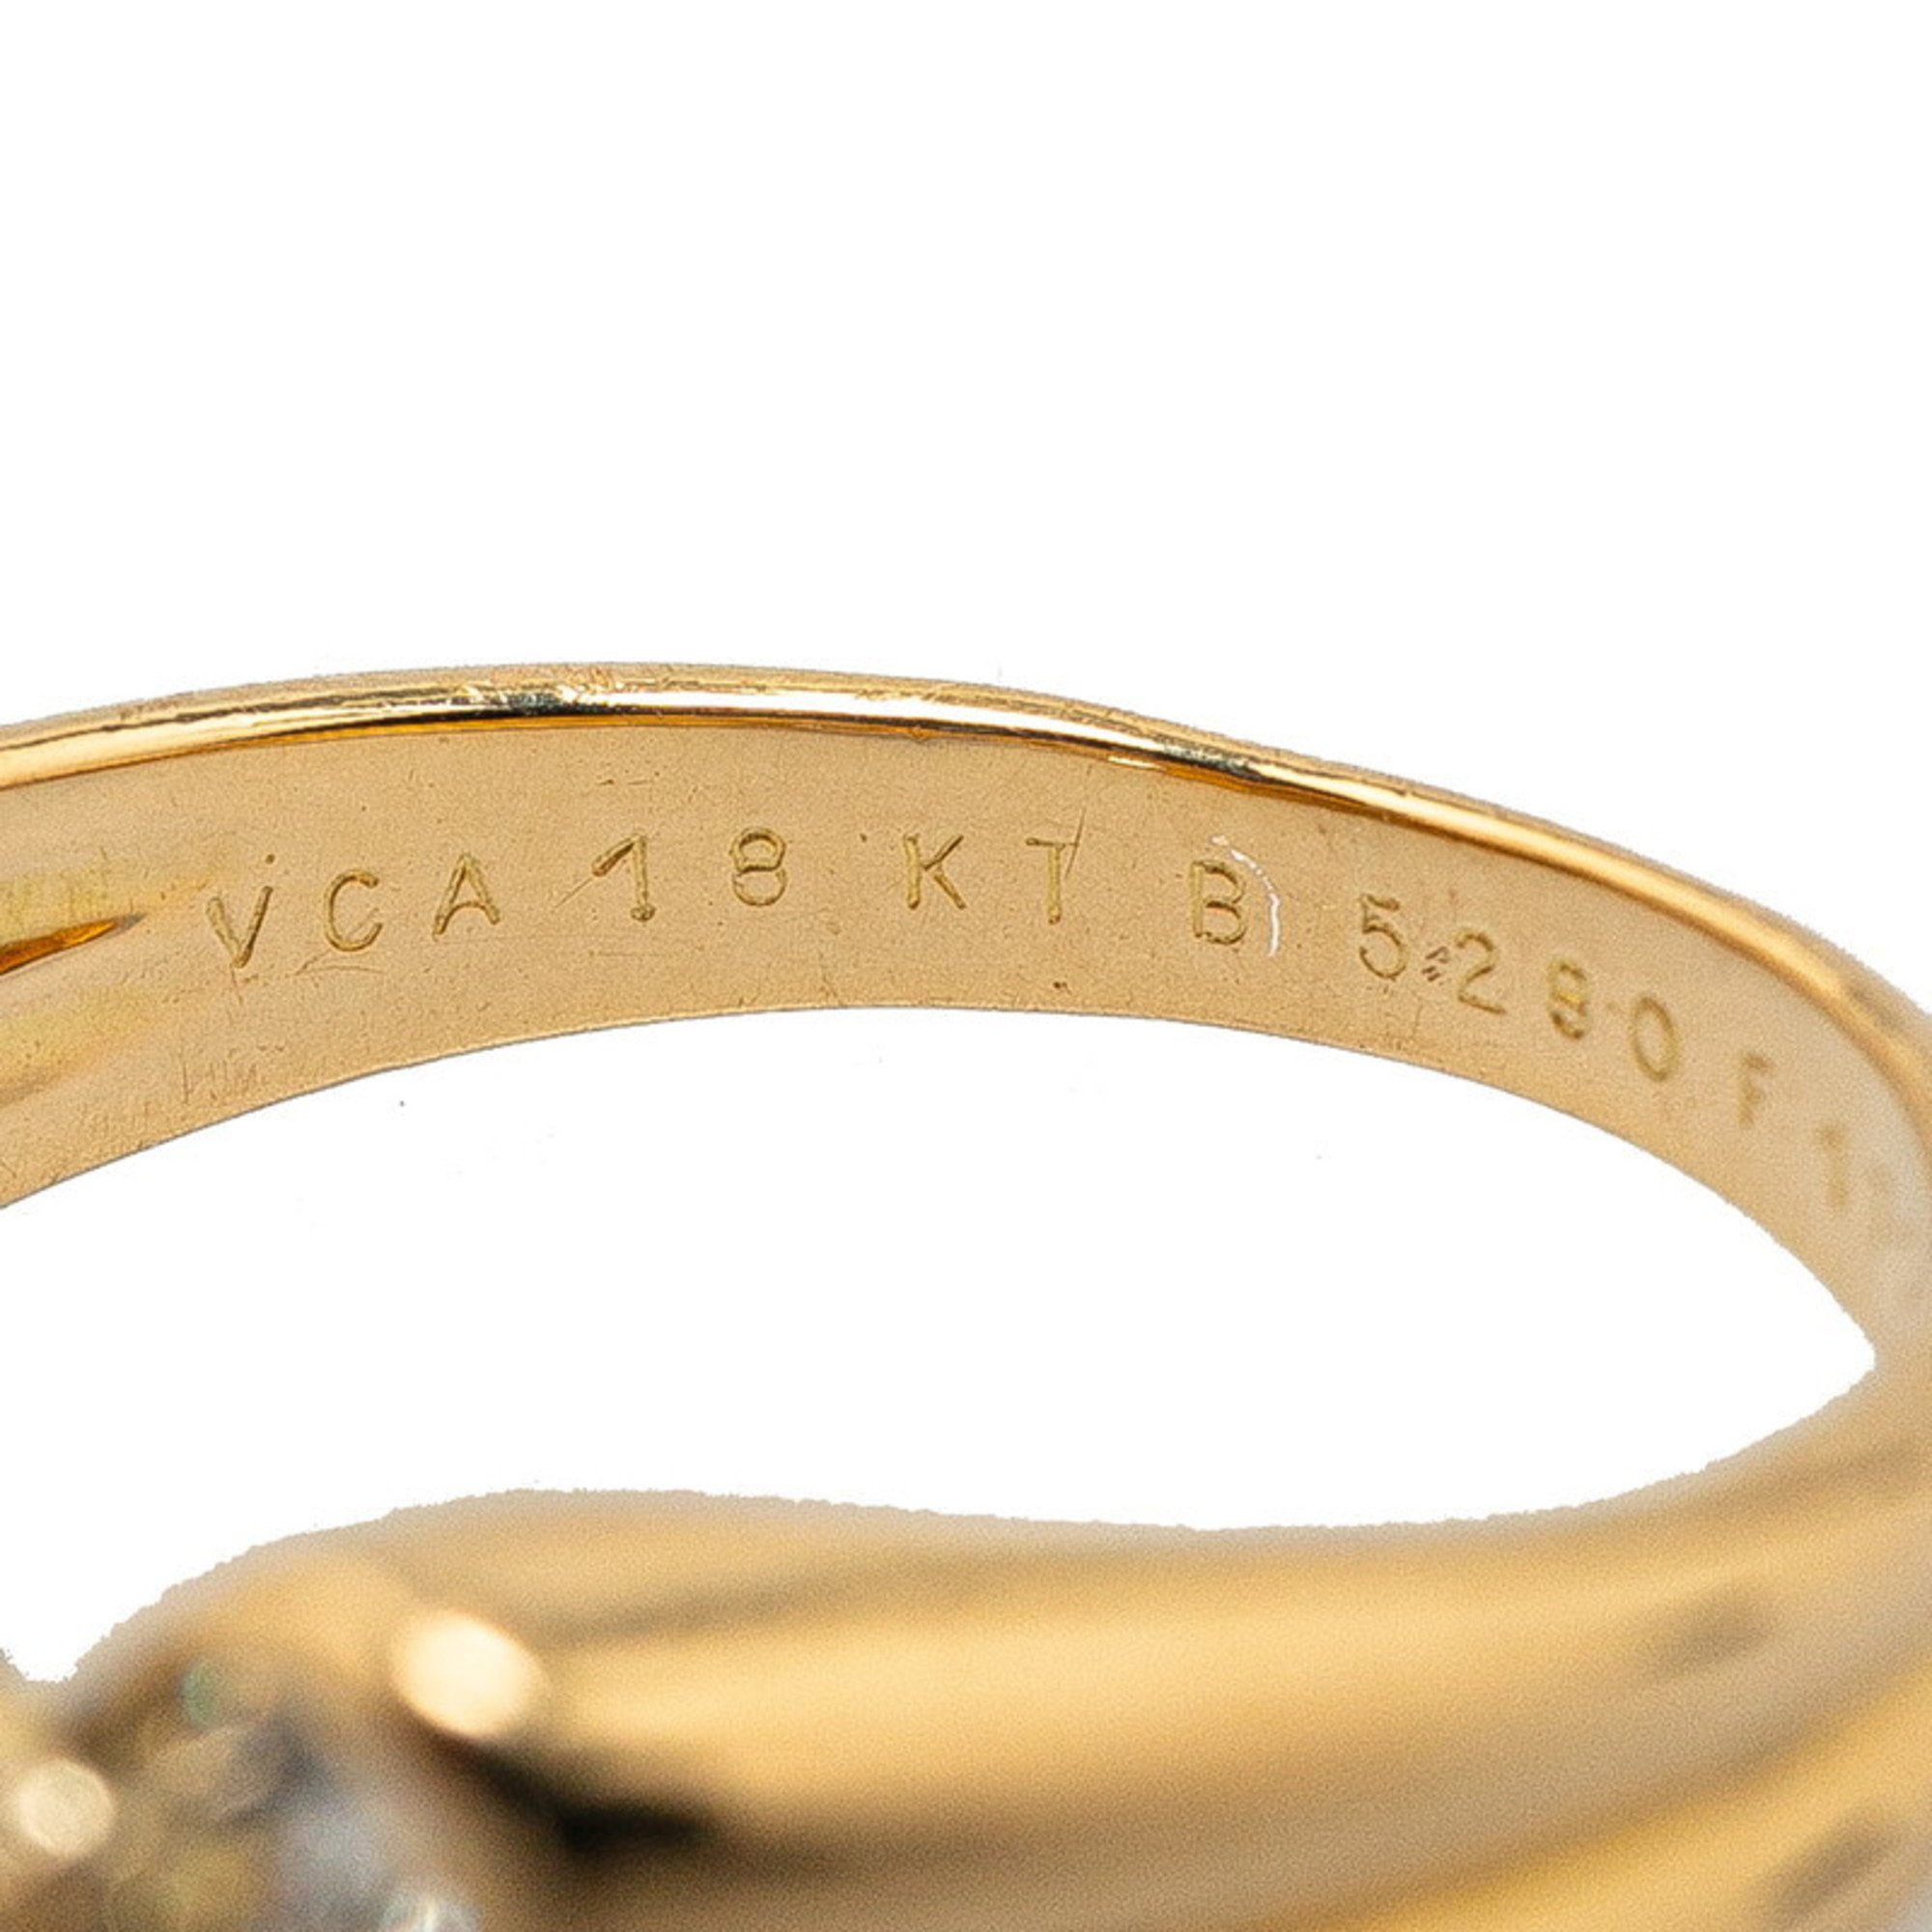 Van Cleef & Arpels Butterfly motif ring, K18YG yellow gold, for women,